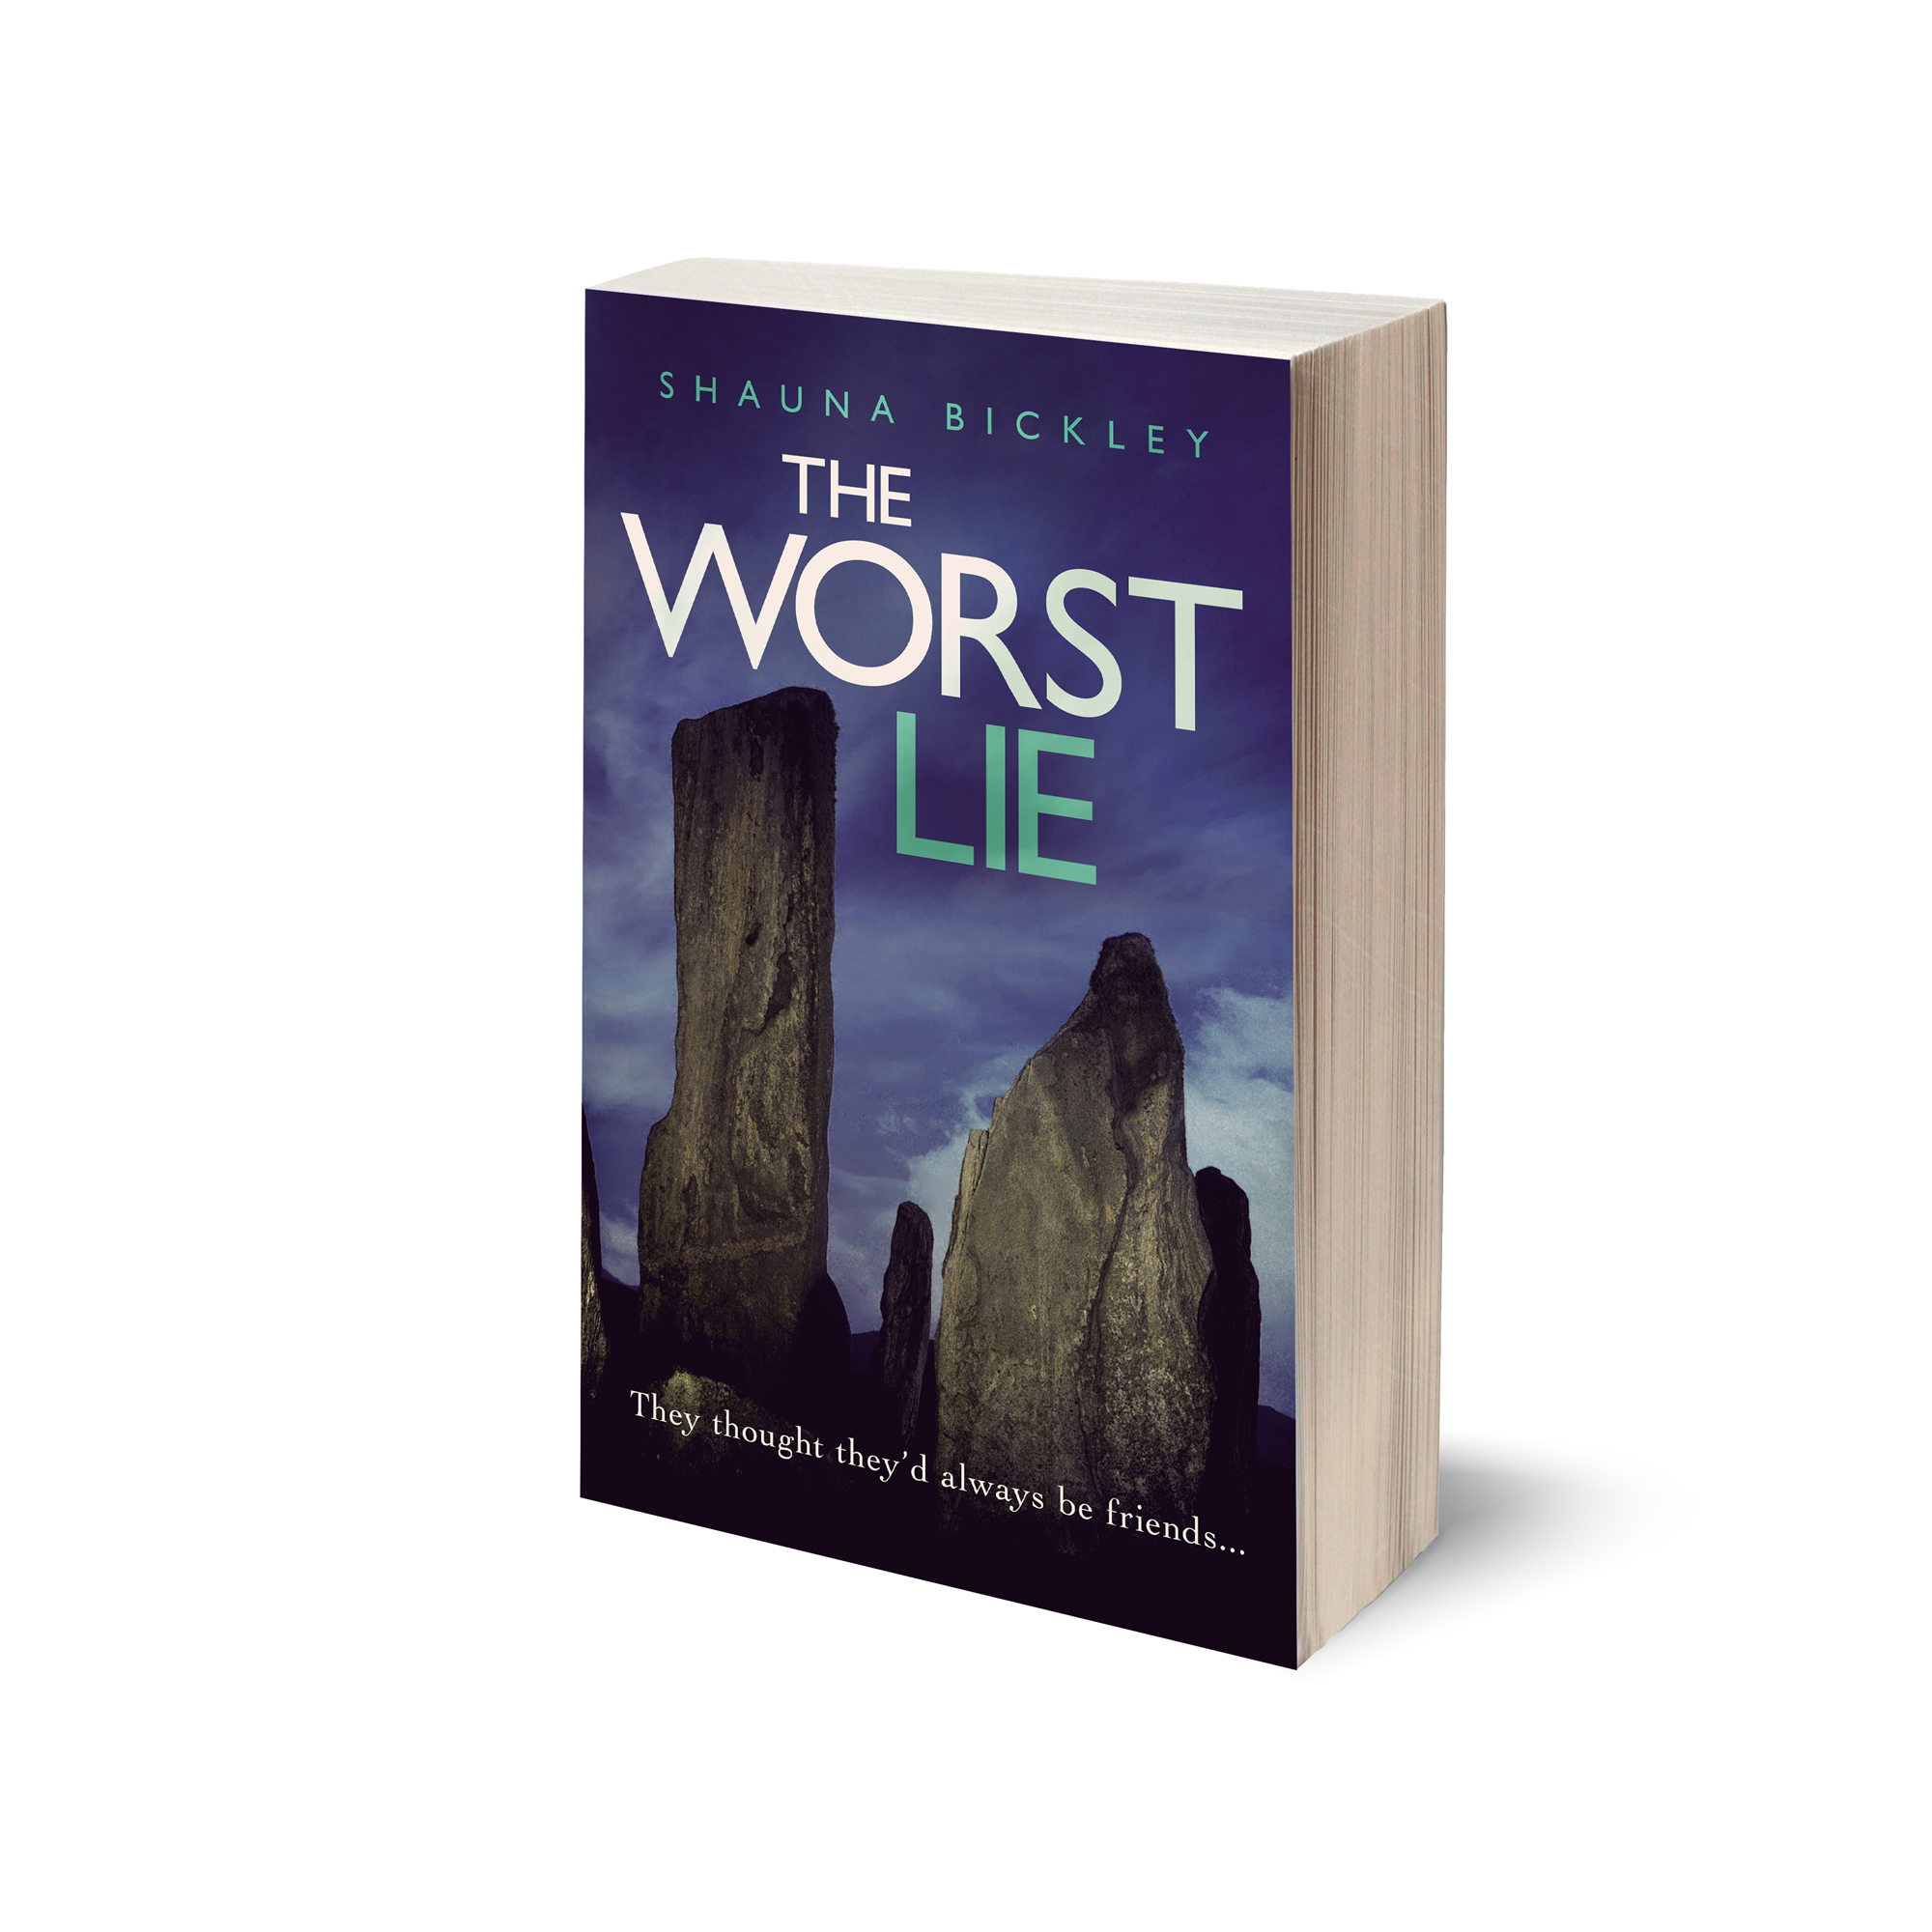 FREE: The Worst Lie by Shauna Bickley